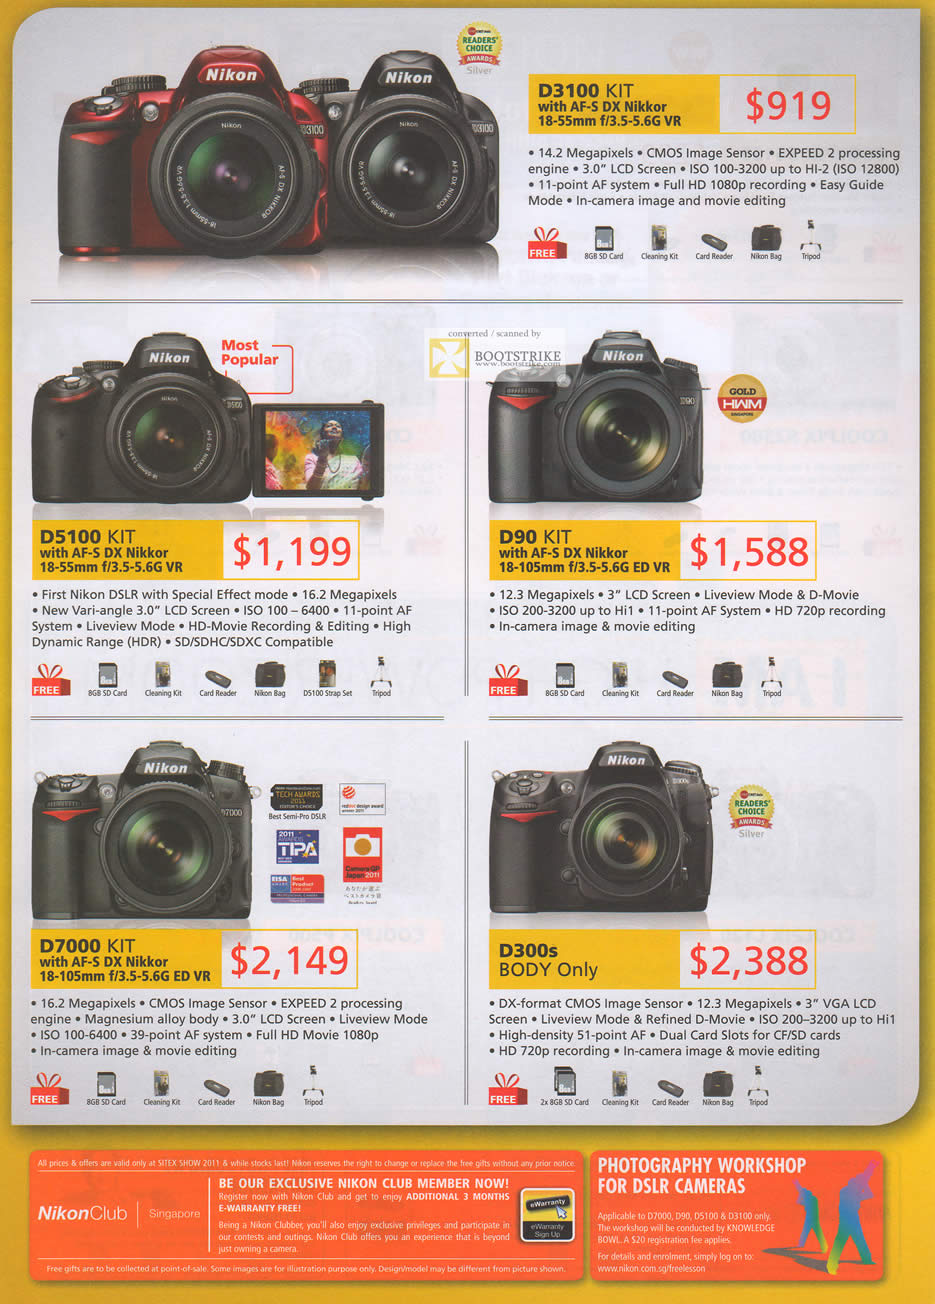 SITEX 2011 price list image brochure of Nikon Digital Cameras DSLR D3100 KIT, D5100 KIT, D90 KIT, D7000 KIT, D300s Body